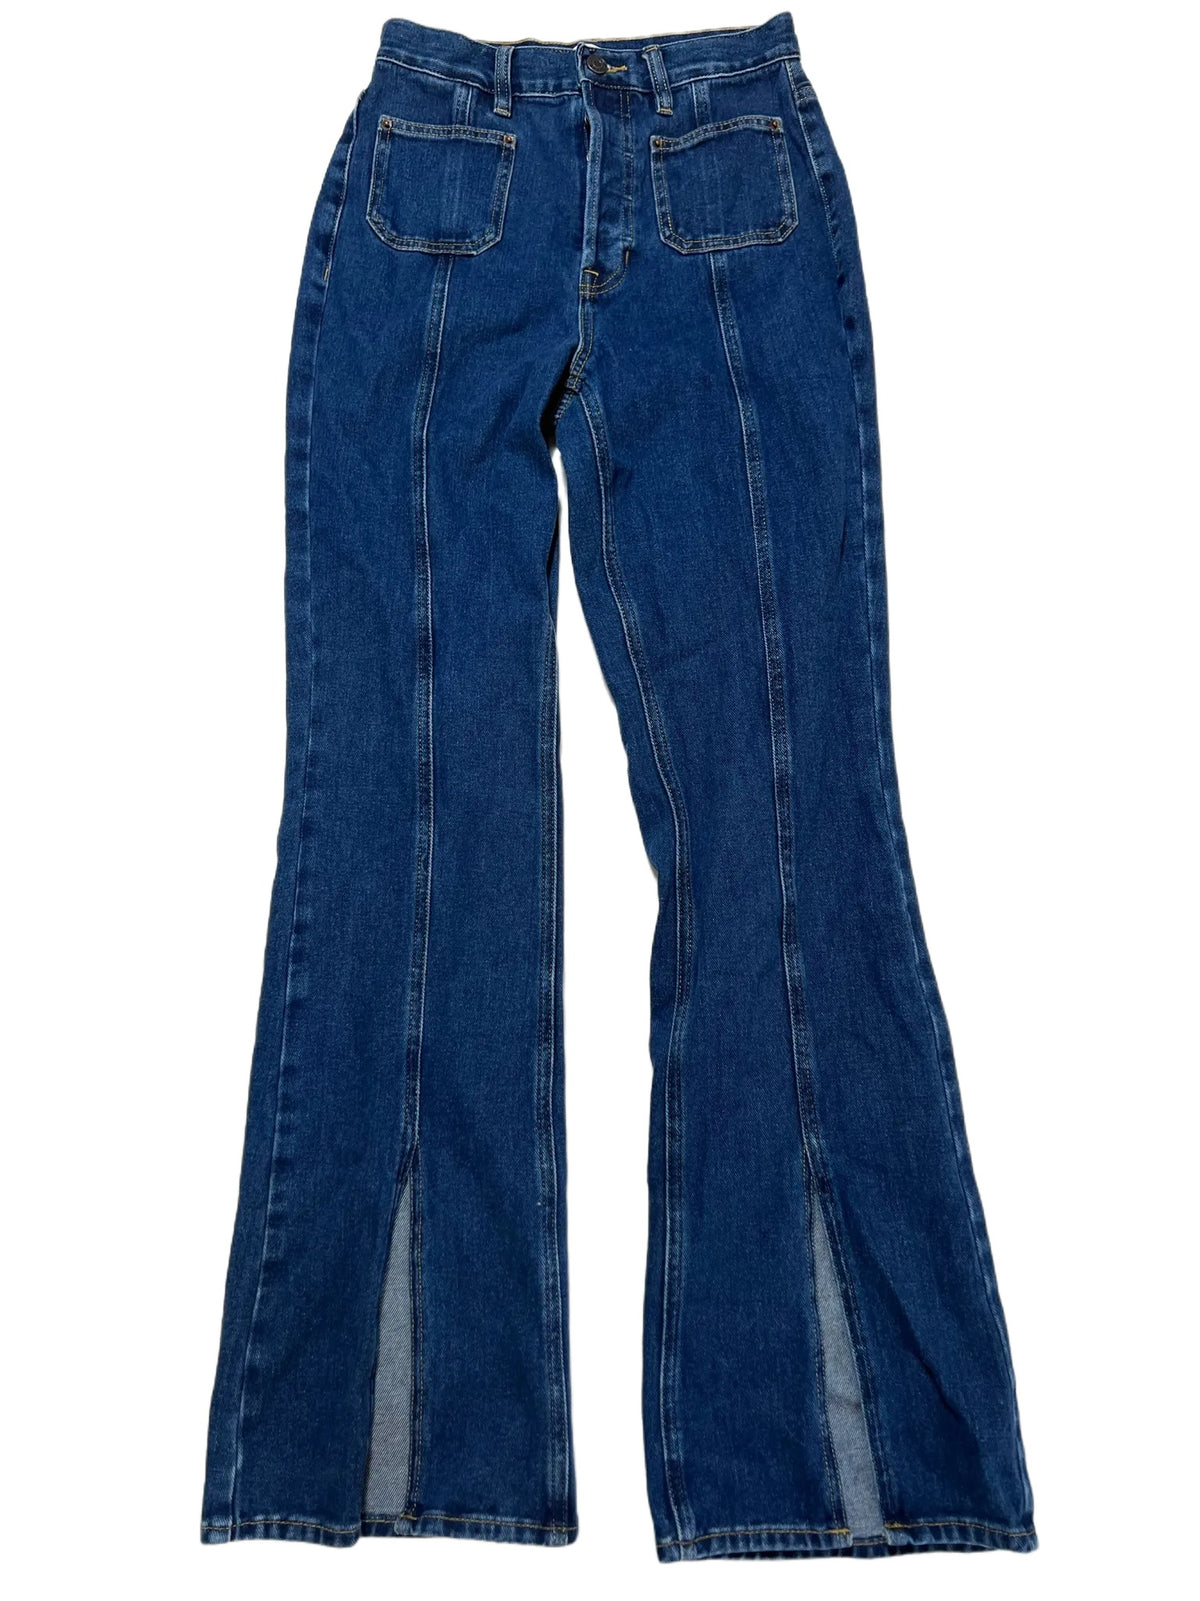 Pacsun- Dark Wash Flare Jeans